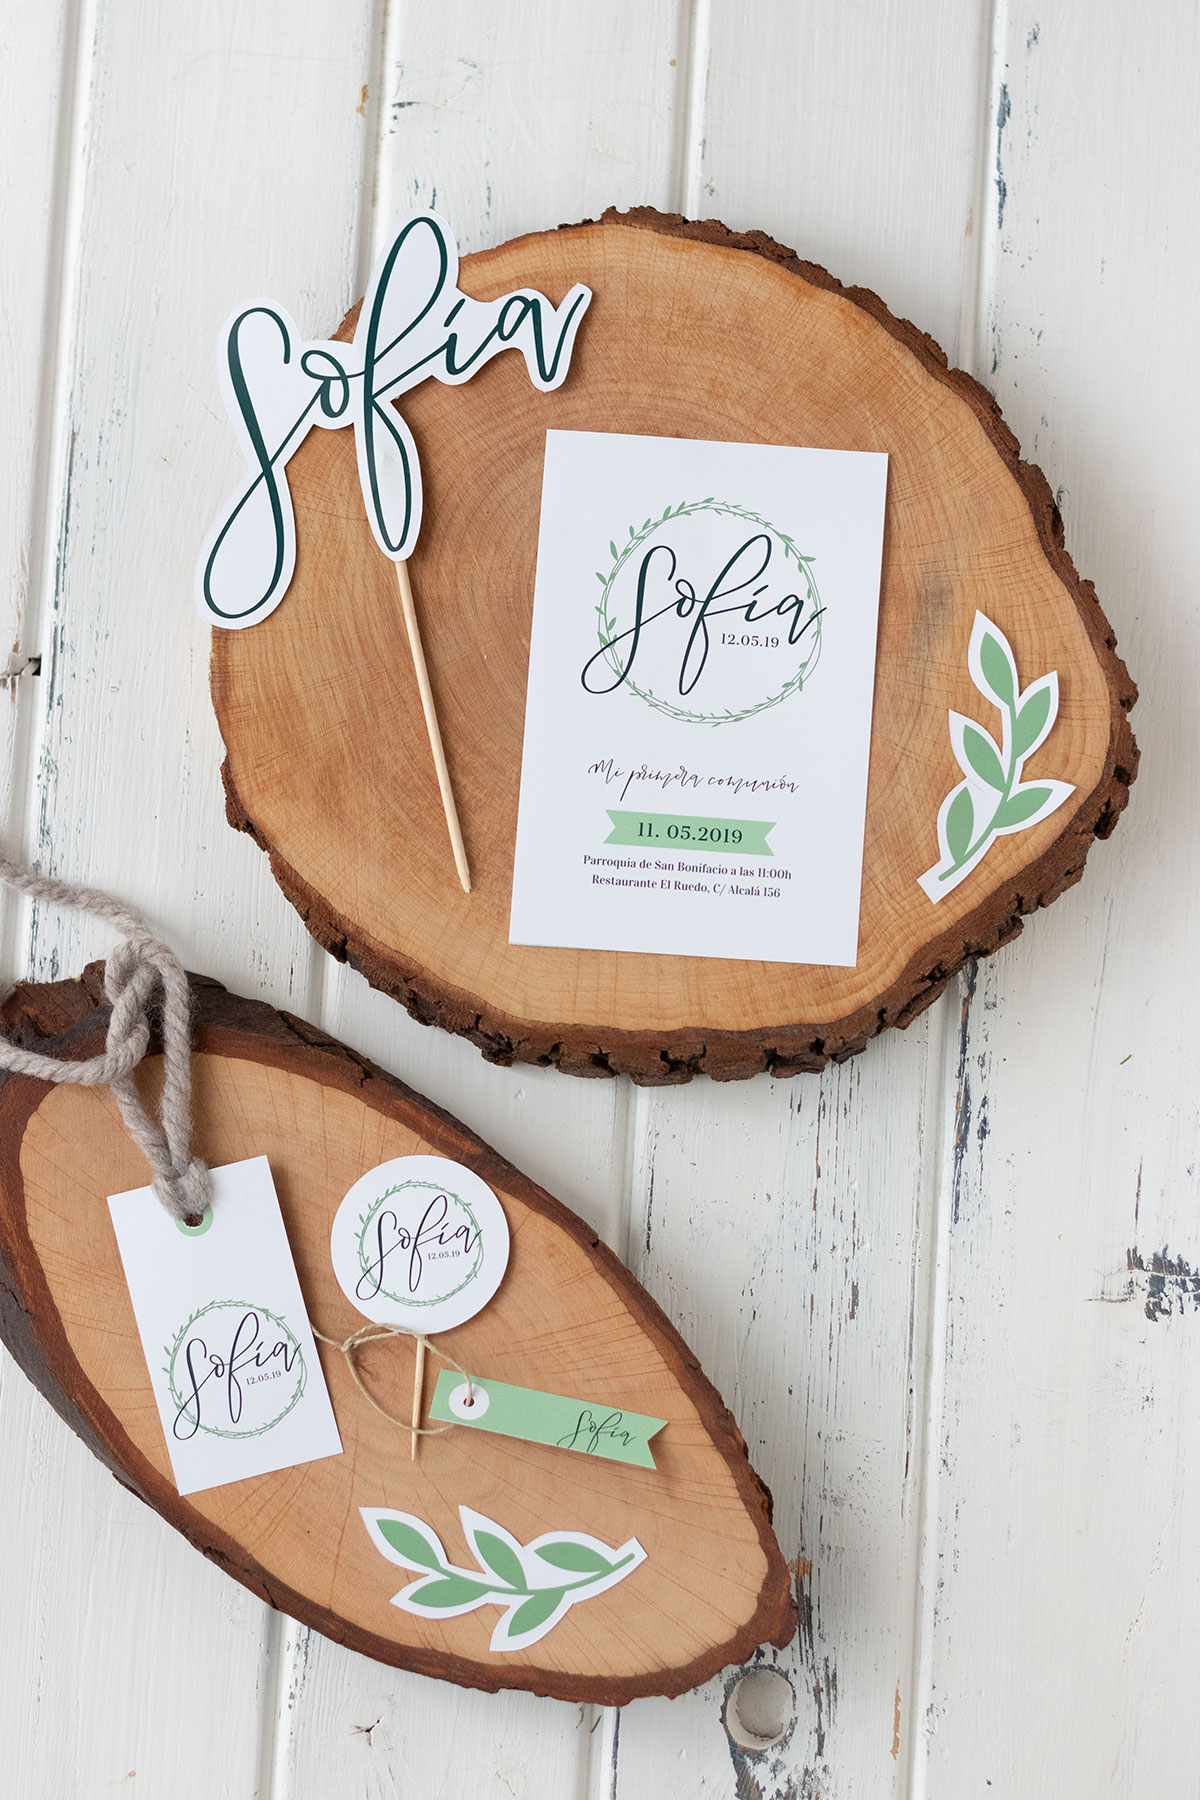 DIY: cajas de madera para decorar tu boda